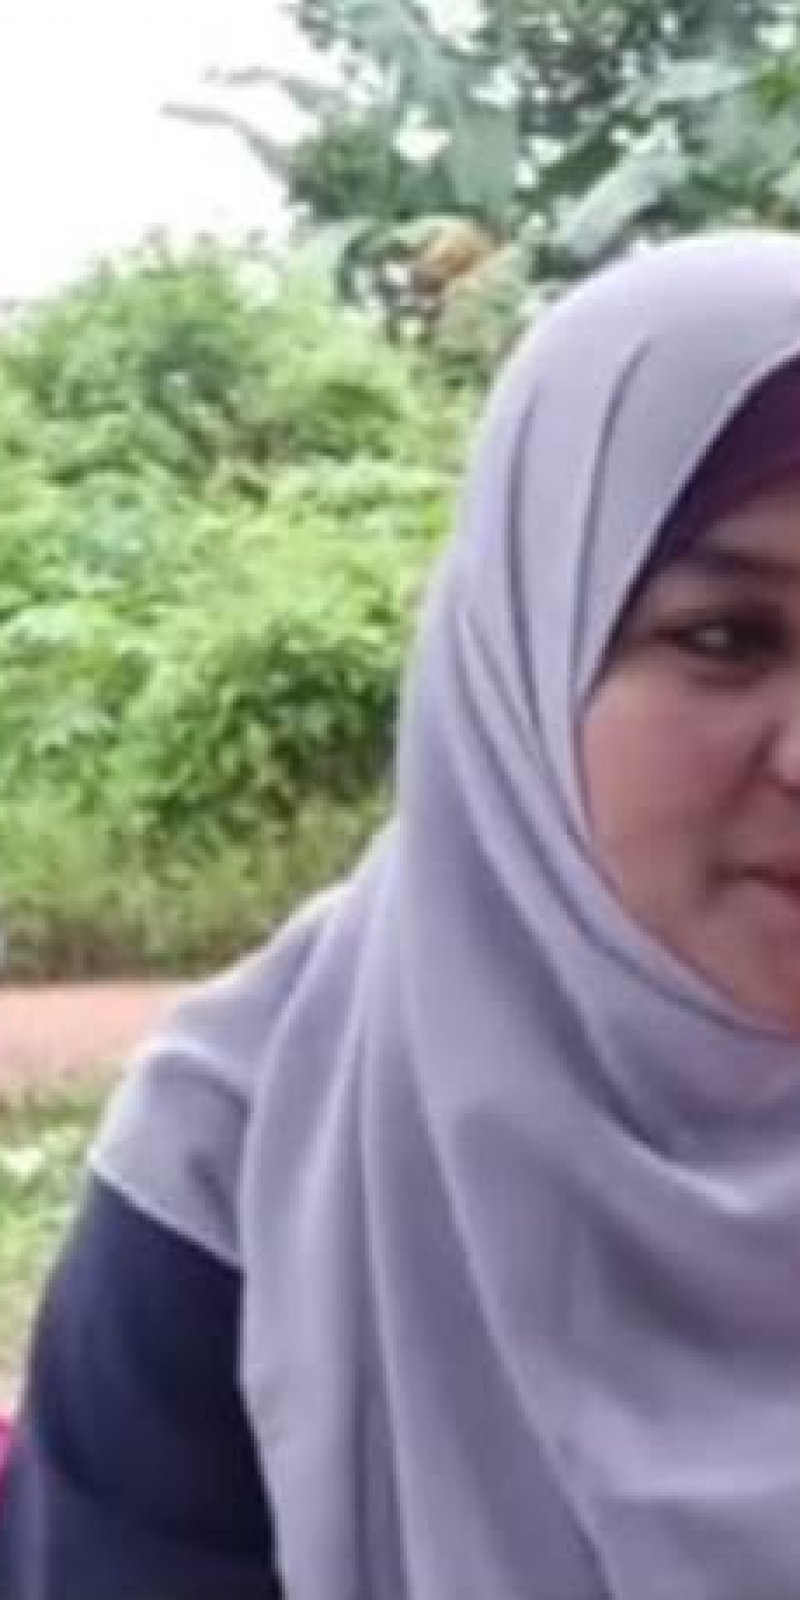 Pasang Tarif Rp185 Juta Janda Cantik Ini Viral Di Media Sosial Video Antara News Aceh